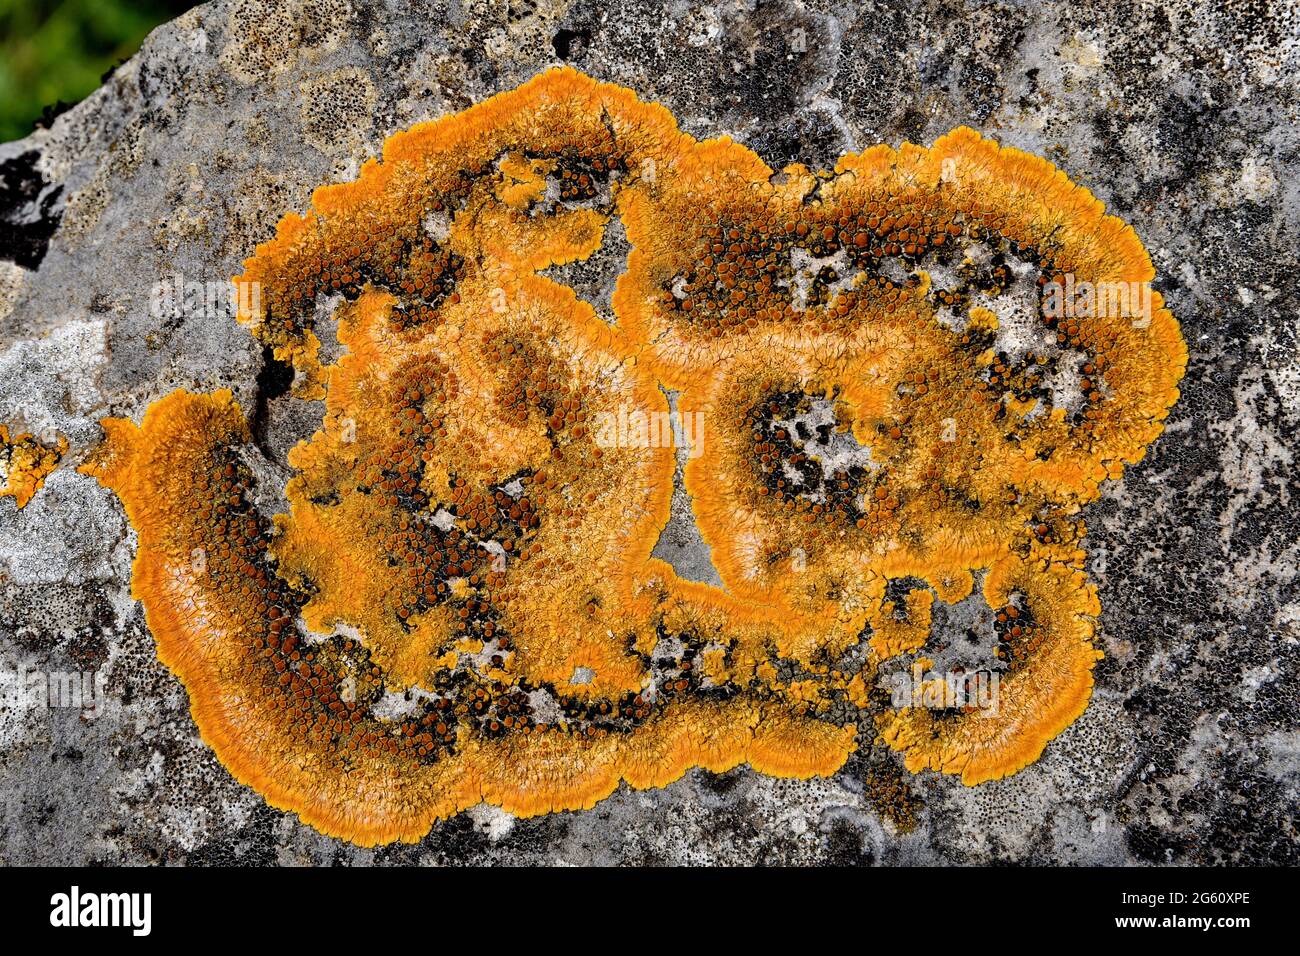 France, Doubs, orange crustacean lichen Stock Photo